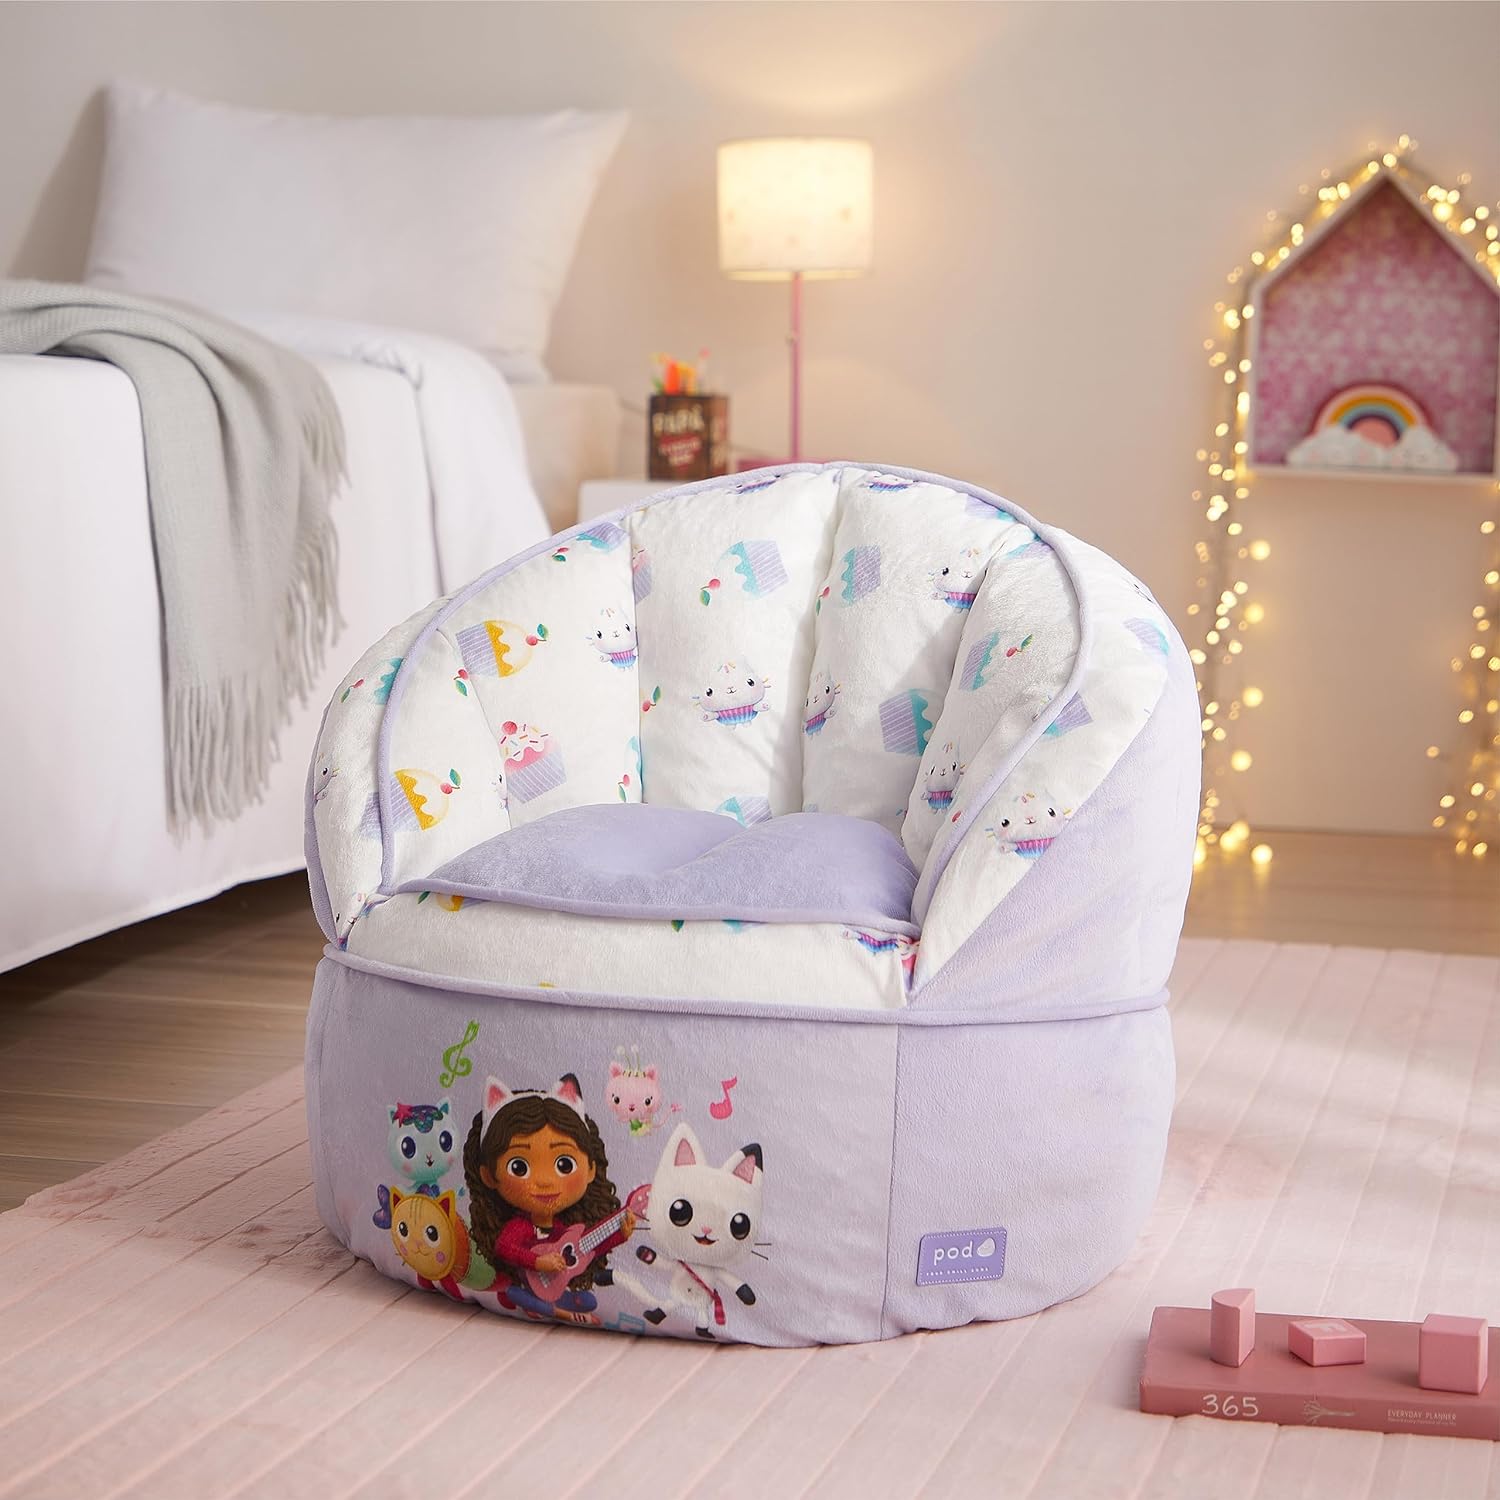 Idea Nuova Gabbys Dollhouse Purple Round Bean Bag Chair for Kids in room